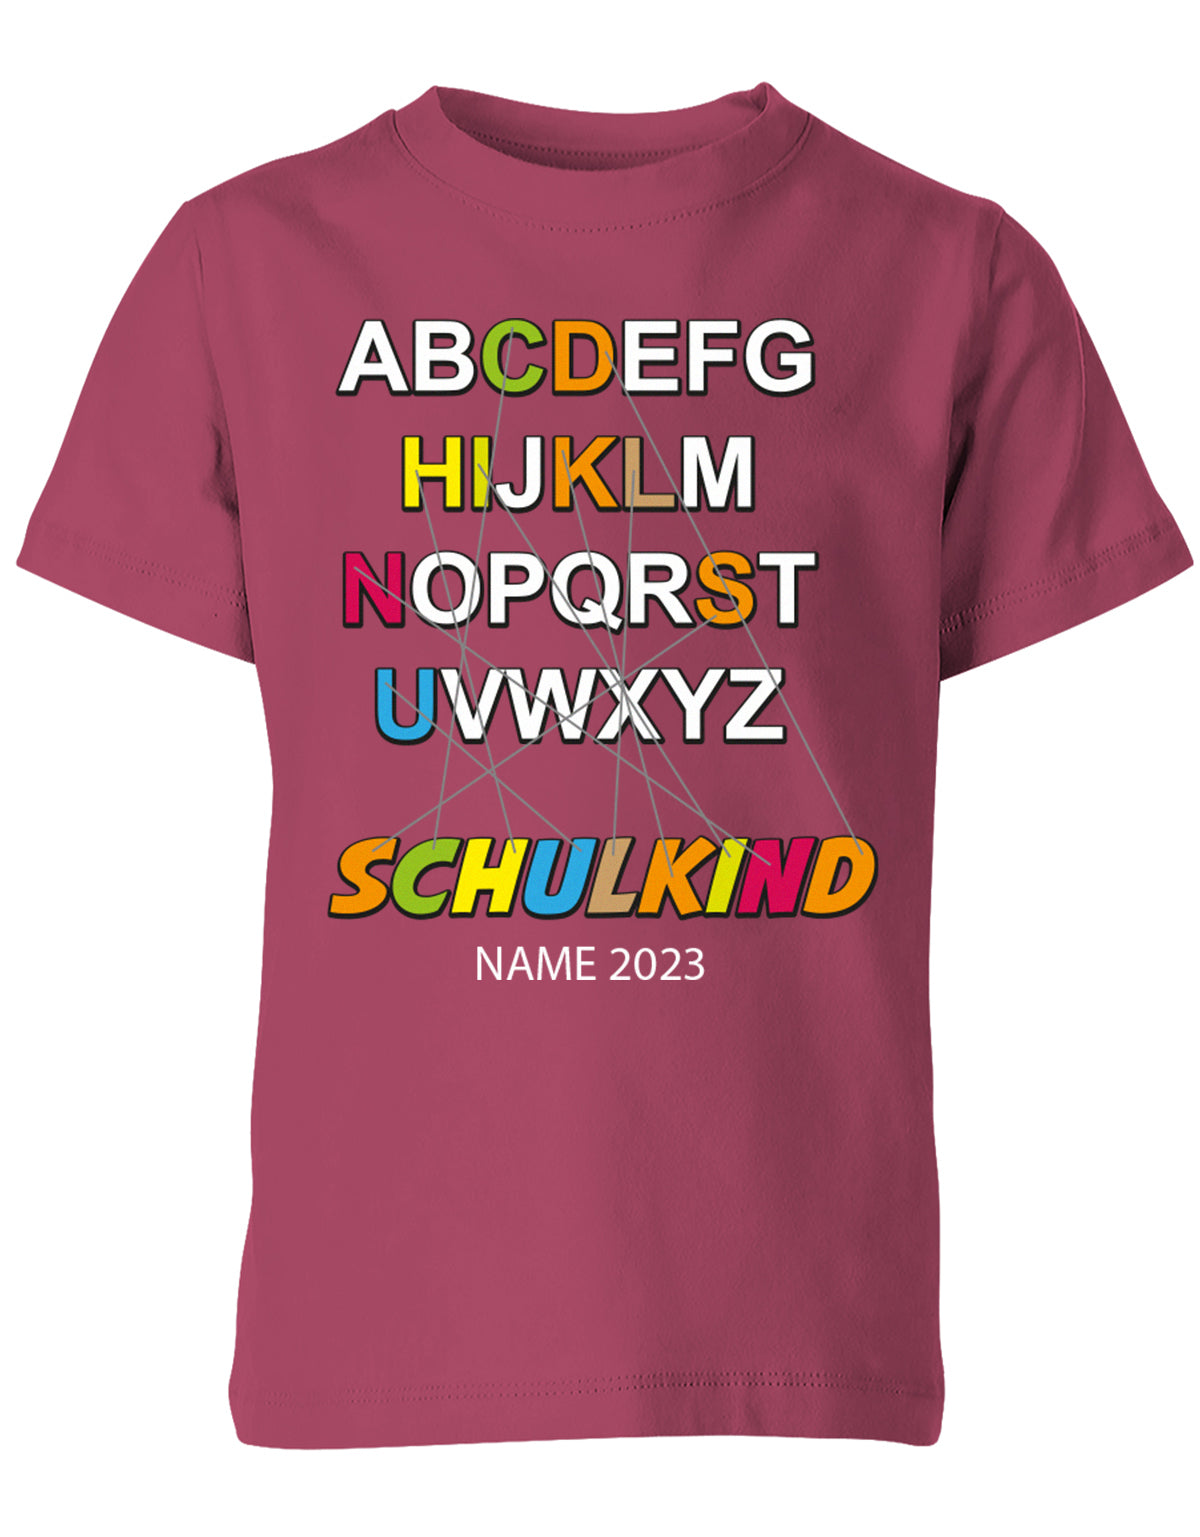 Schulkind Alphabet ABC mit Name - Einschulung T-Shirt Sorbet tshirt_bedrucken_shirt_bedruckt_bedrucktes_tshirt_textildruck_shirt_personalisieren_top_bedrucken_geschenk_fun_shirt_lustige_sprüche_einschulung